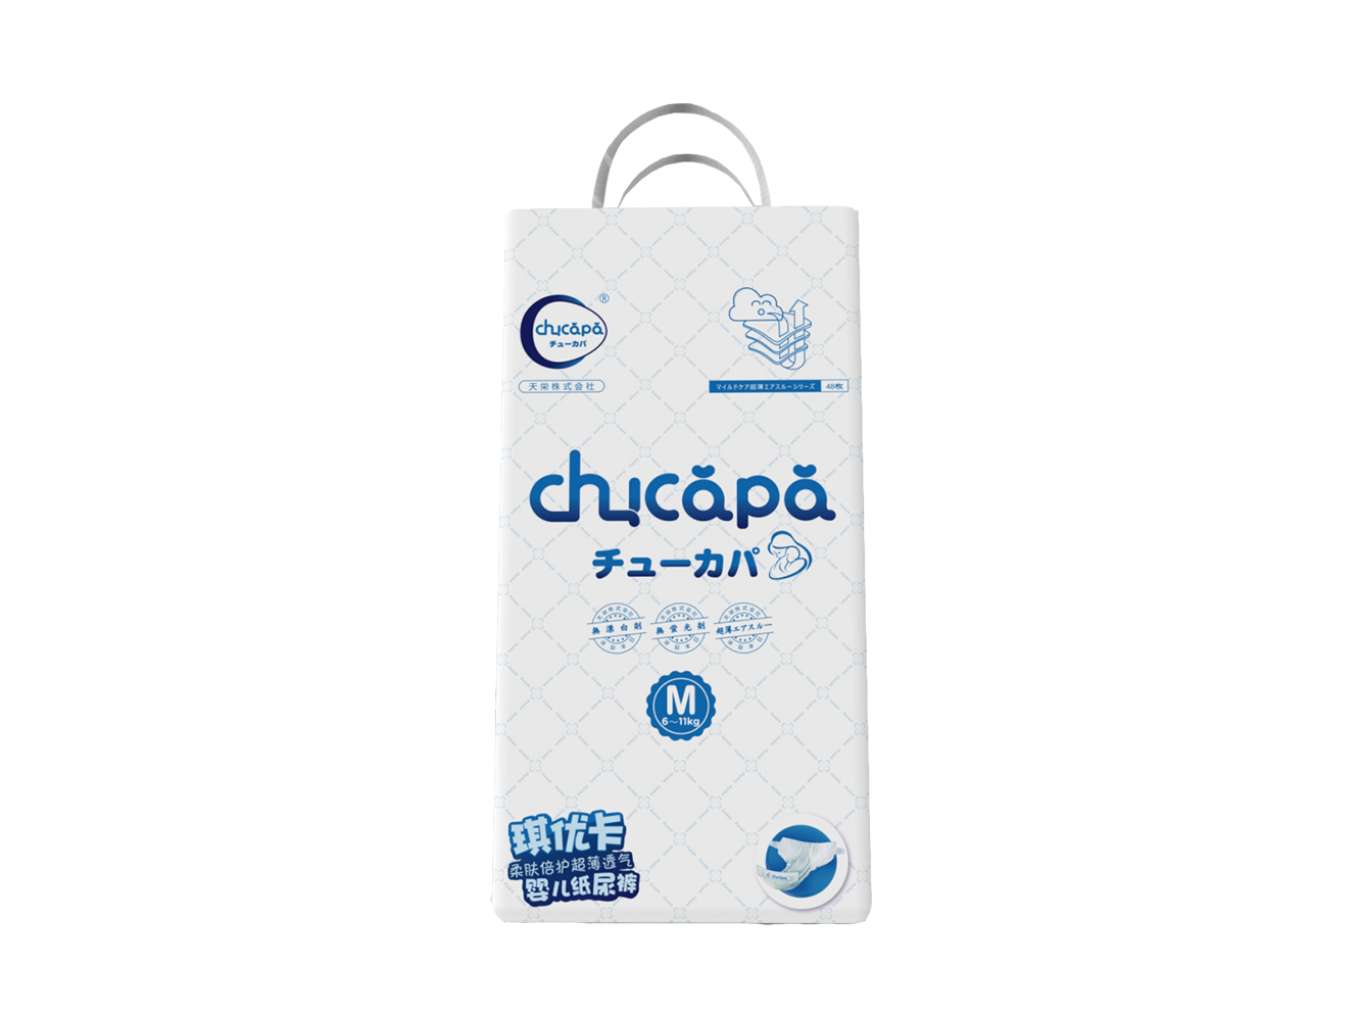 CHUCAPA マイルドケア超薄エアスルーシリーズ